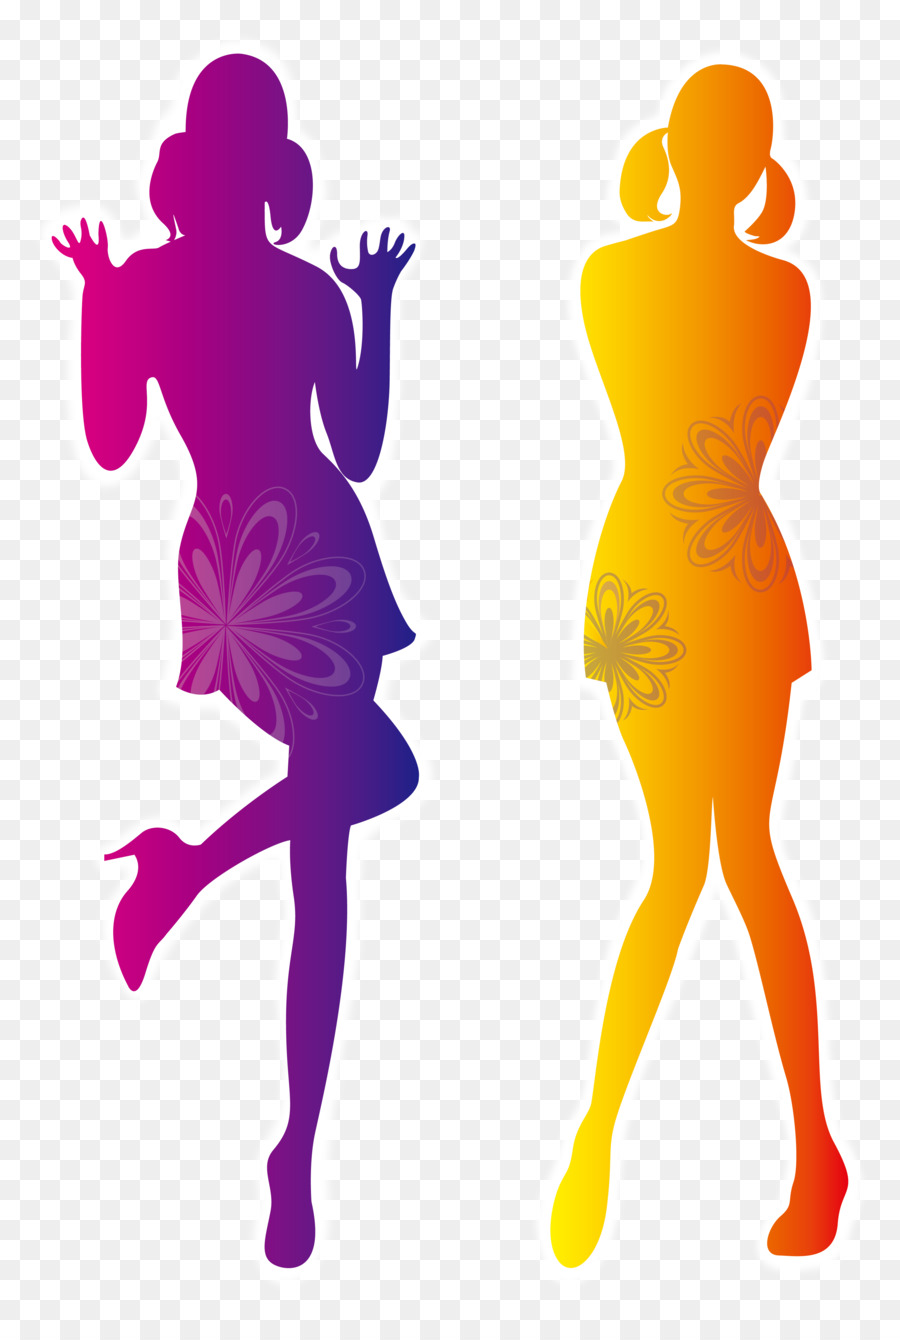 Fashion Silhouette Illustration - Beautiful women wearing high heels png download - 3331*4904 - Free Transparent Fashion png Download.